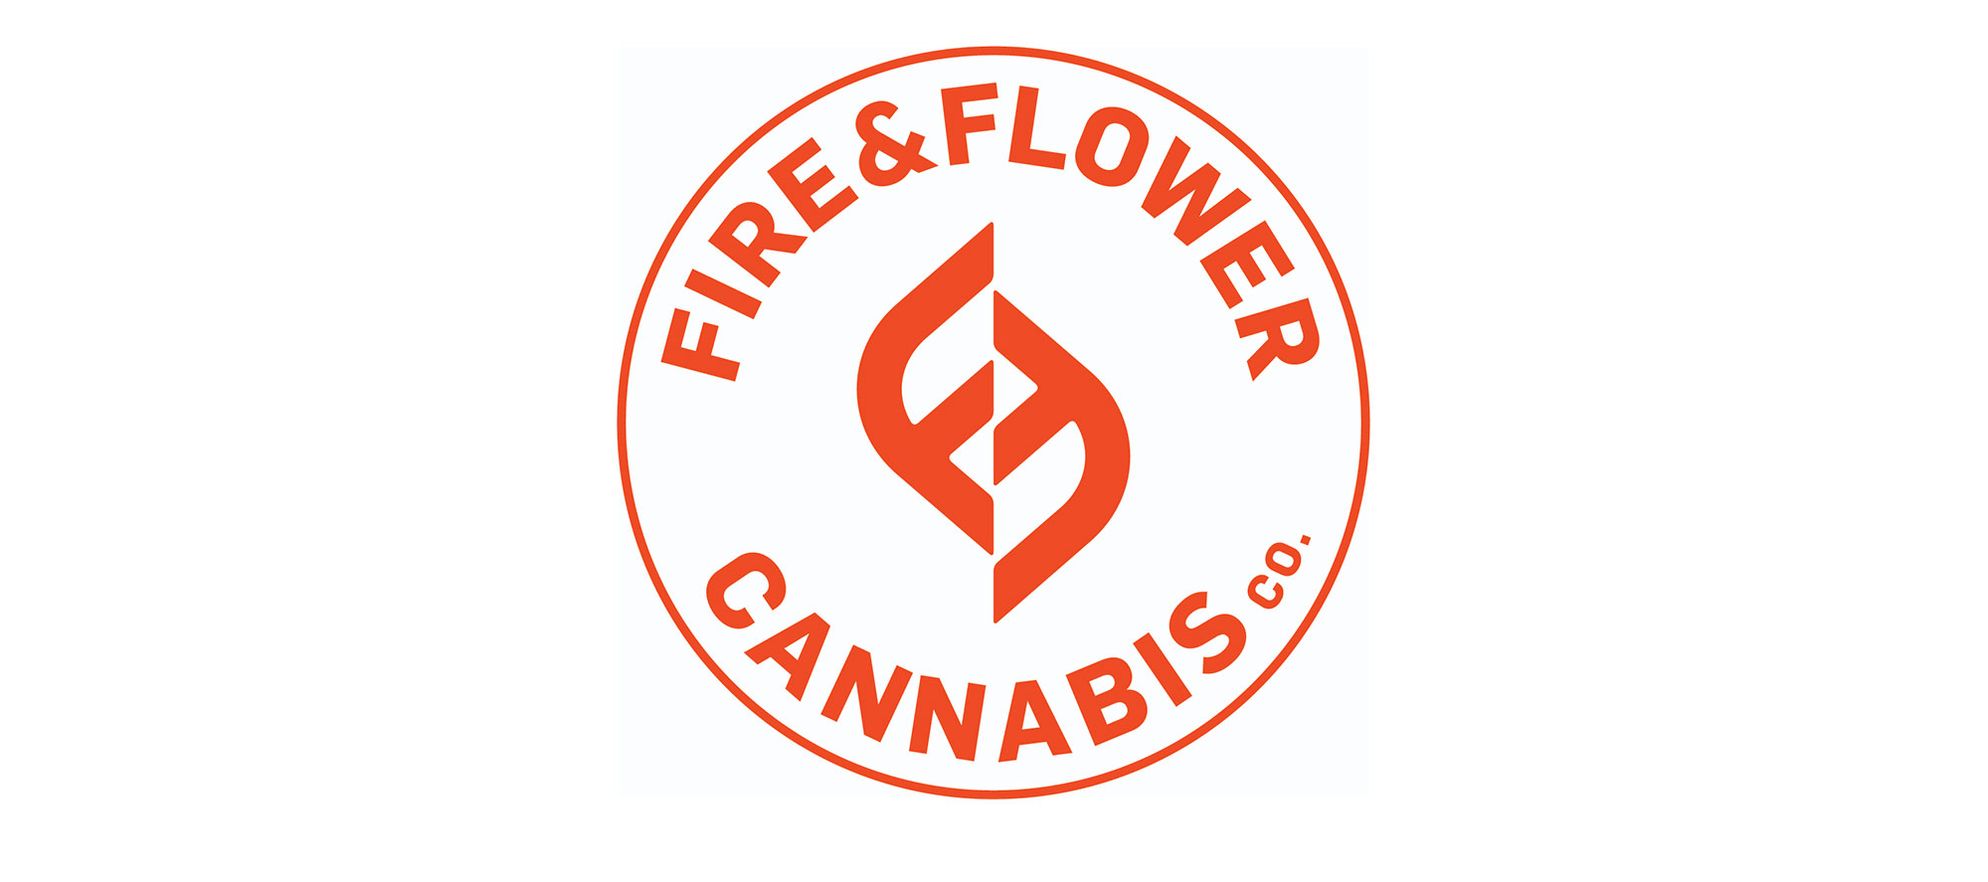 Fire & Flower Cannabis Co.